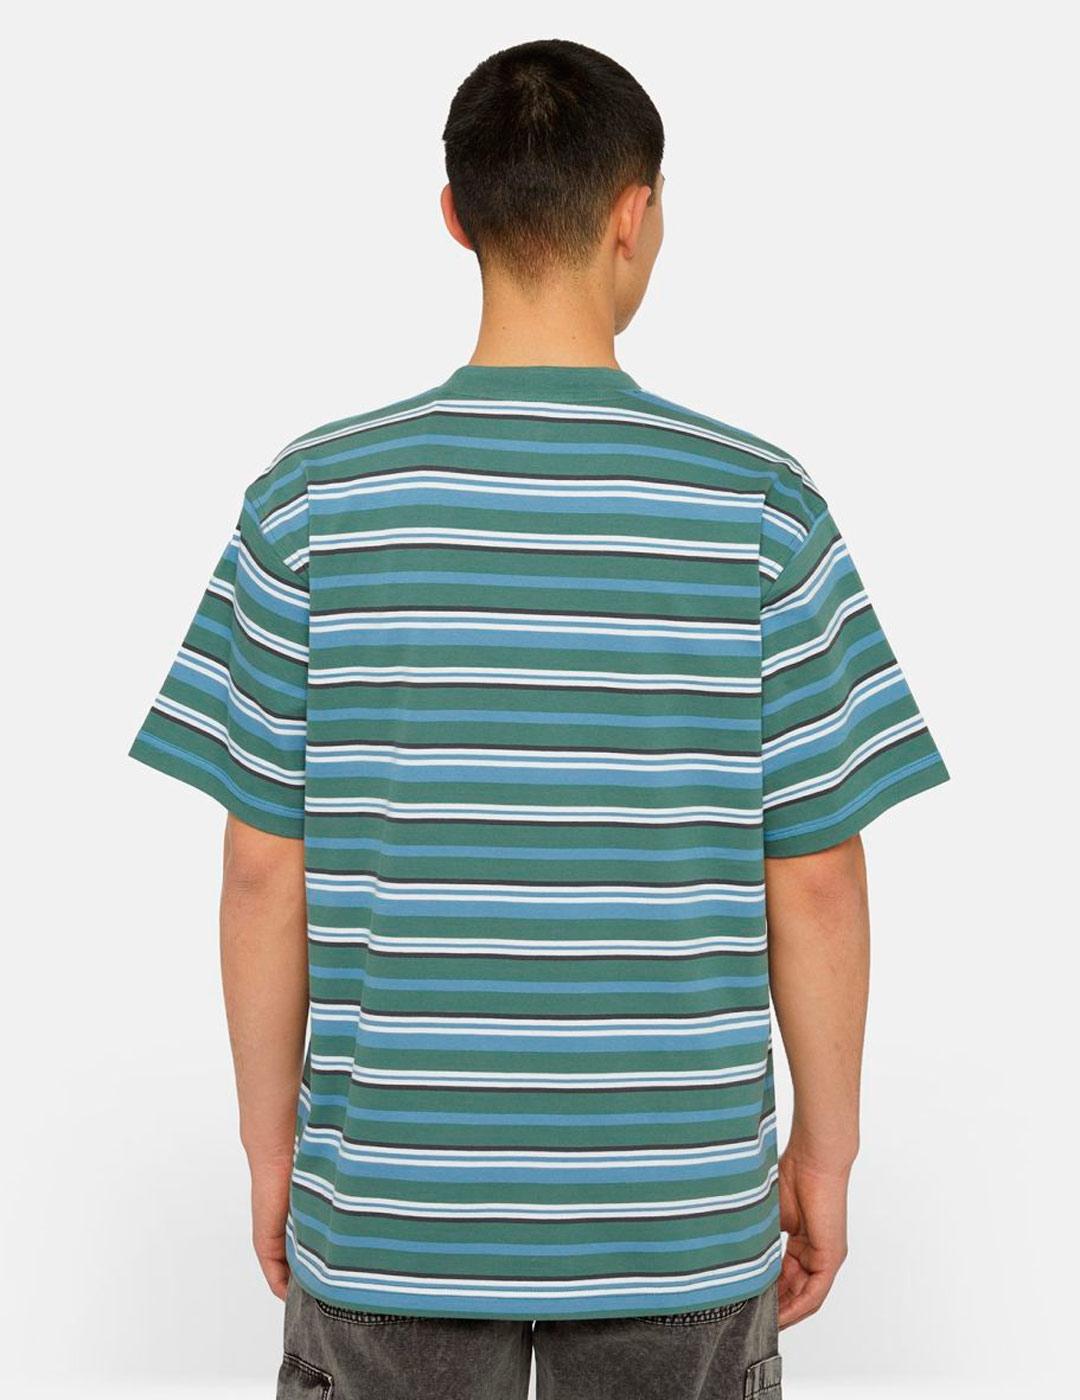 Camiseta GLADE SPRING - Stripe Coronet